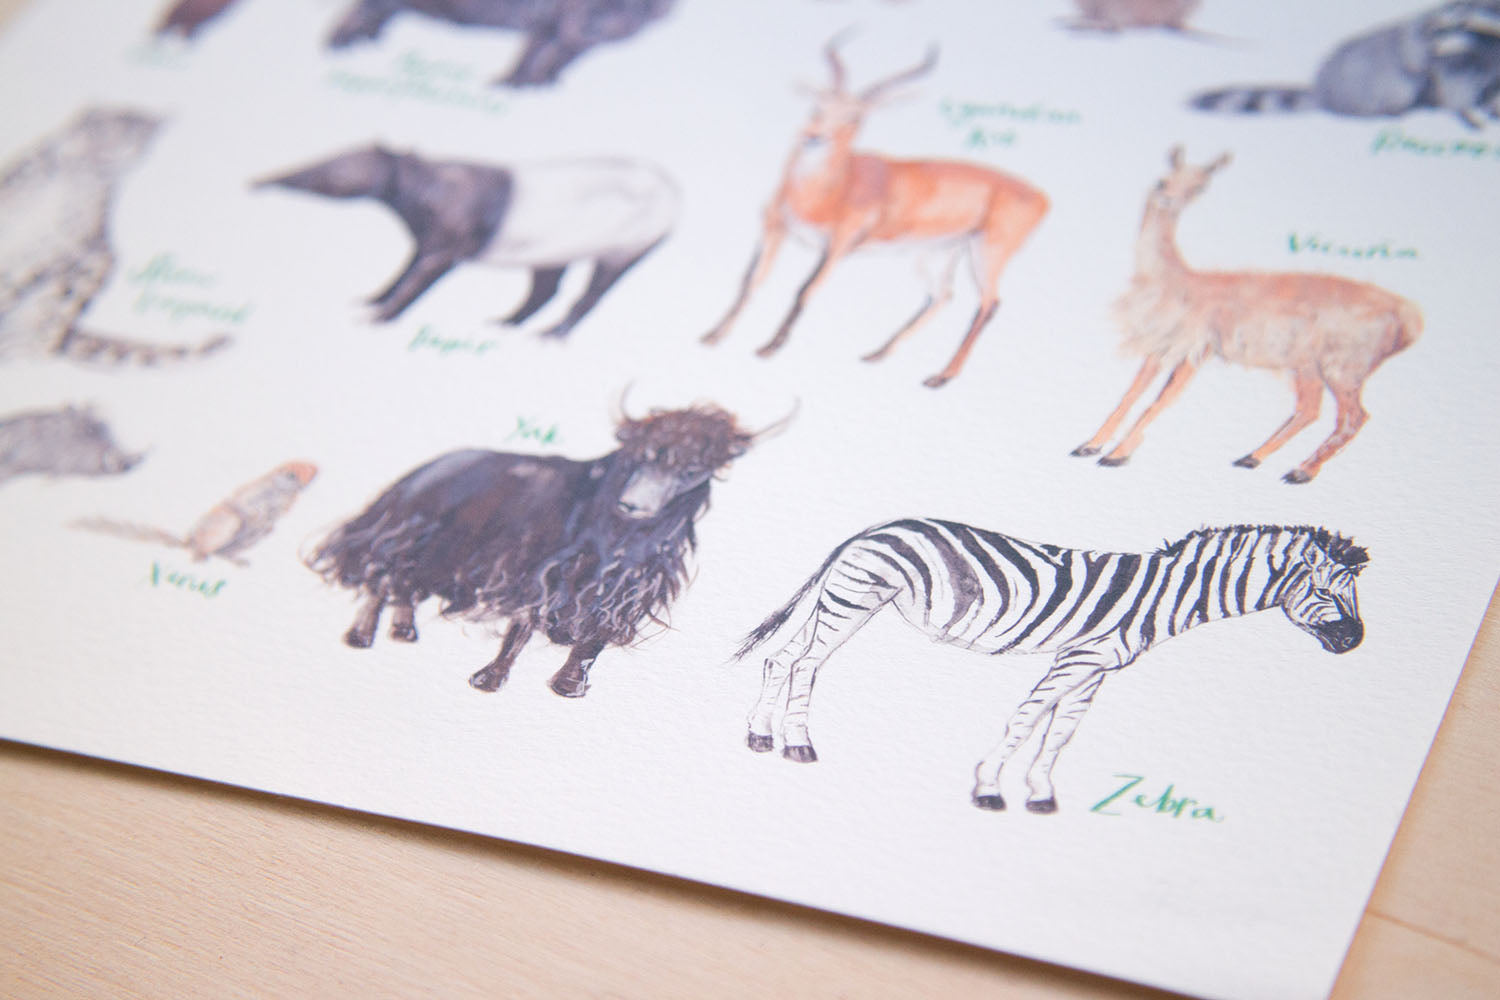 A4 A to Z of Wild Animals Art Print